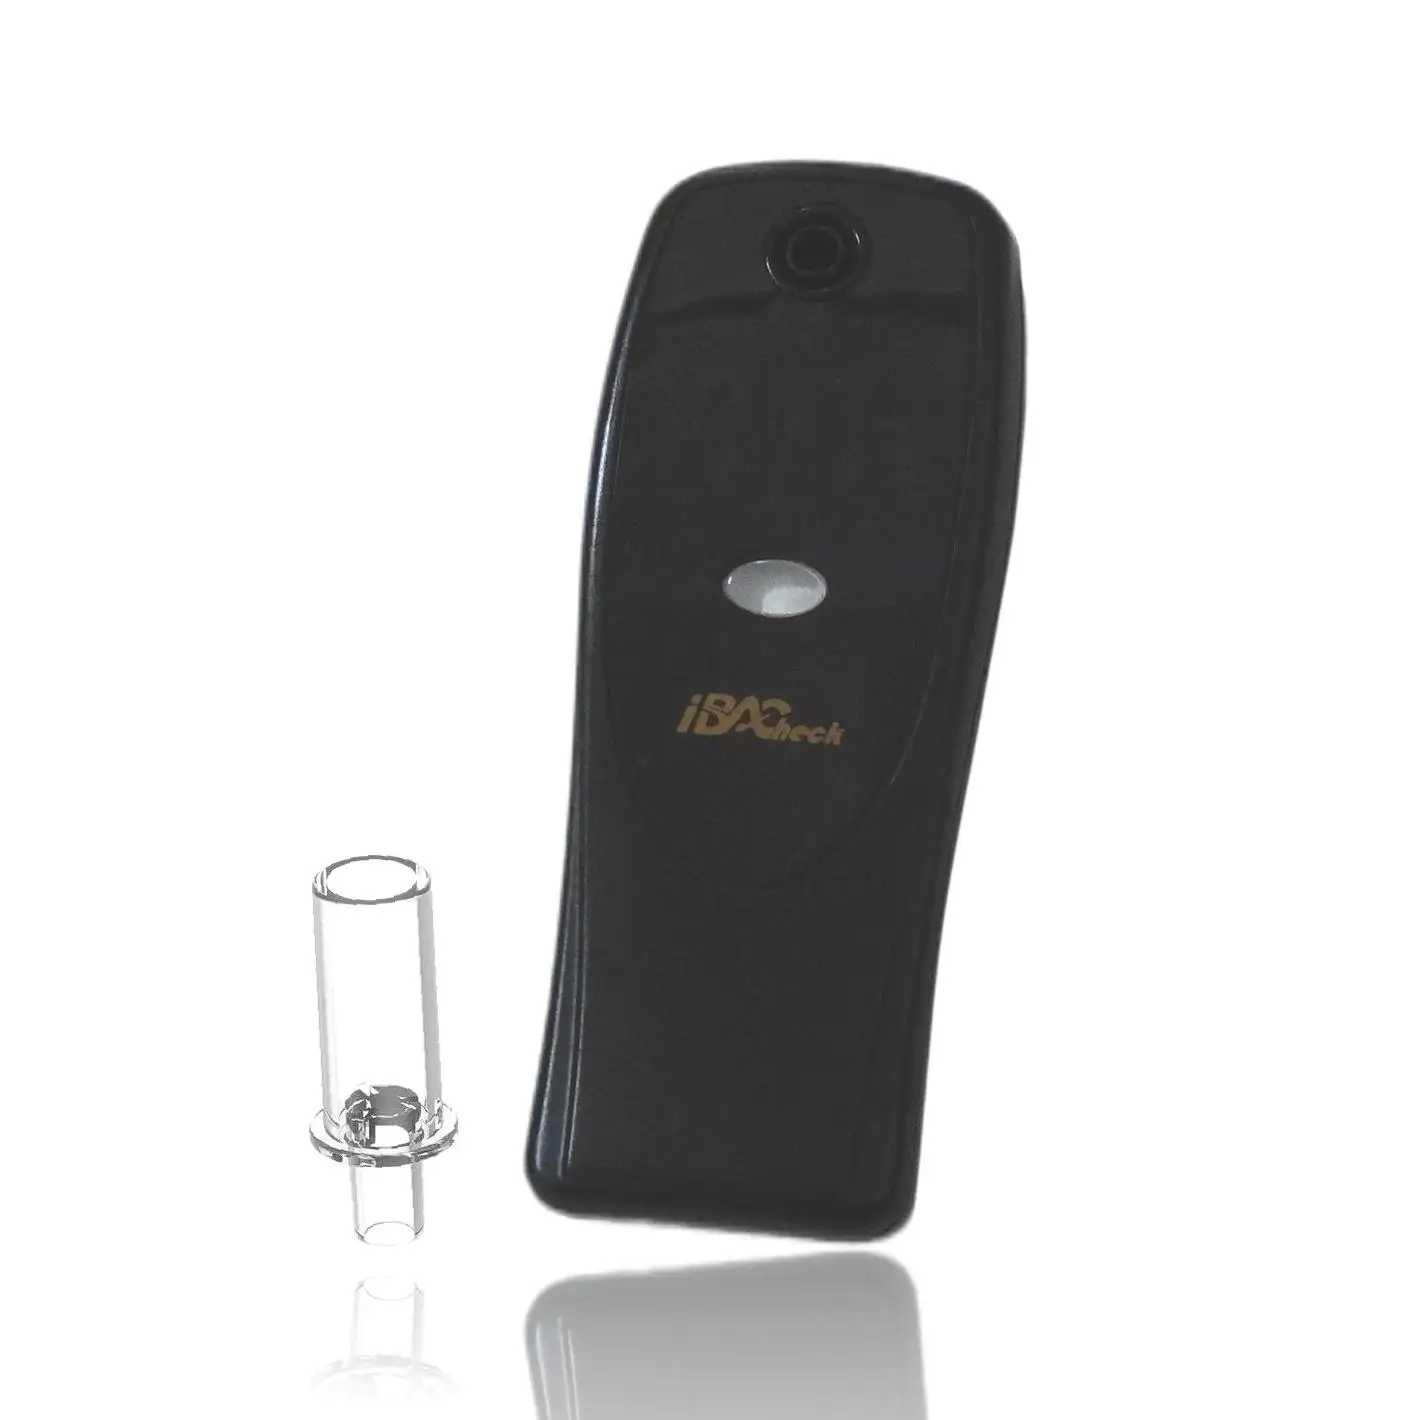 IBacheck AAT008 디지털 호흡 알코올 테스터 저렴한 가격 저렴한 비용